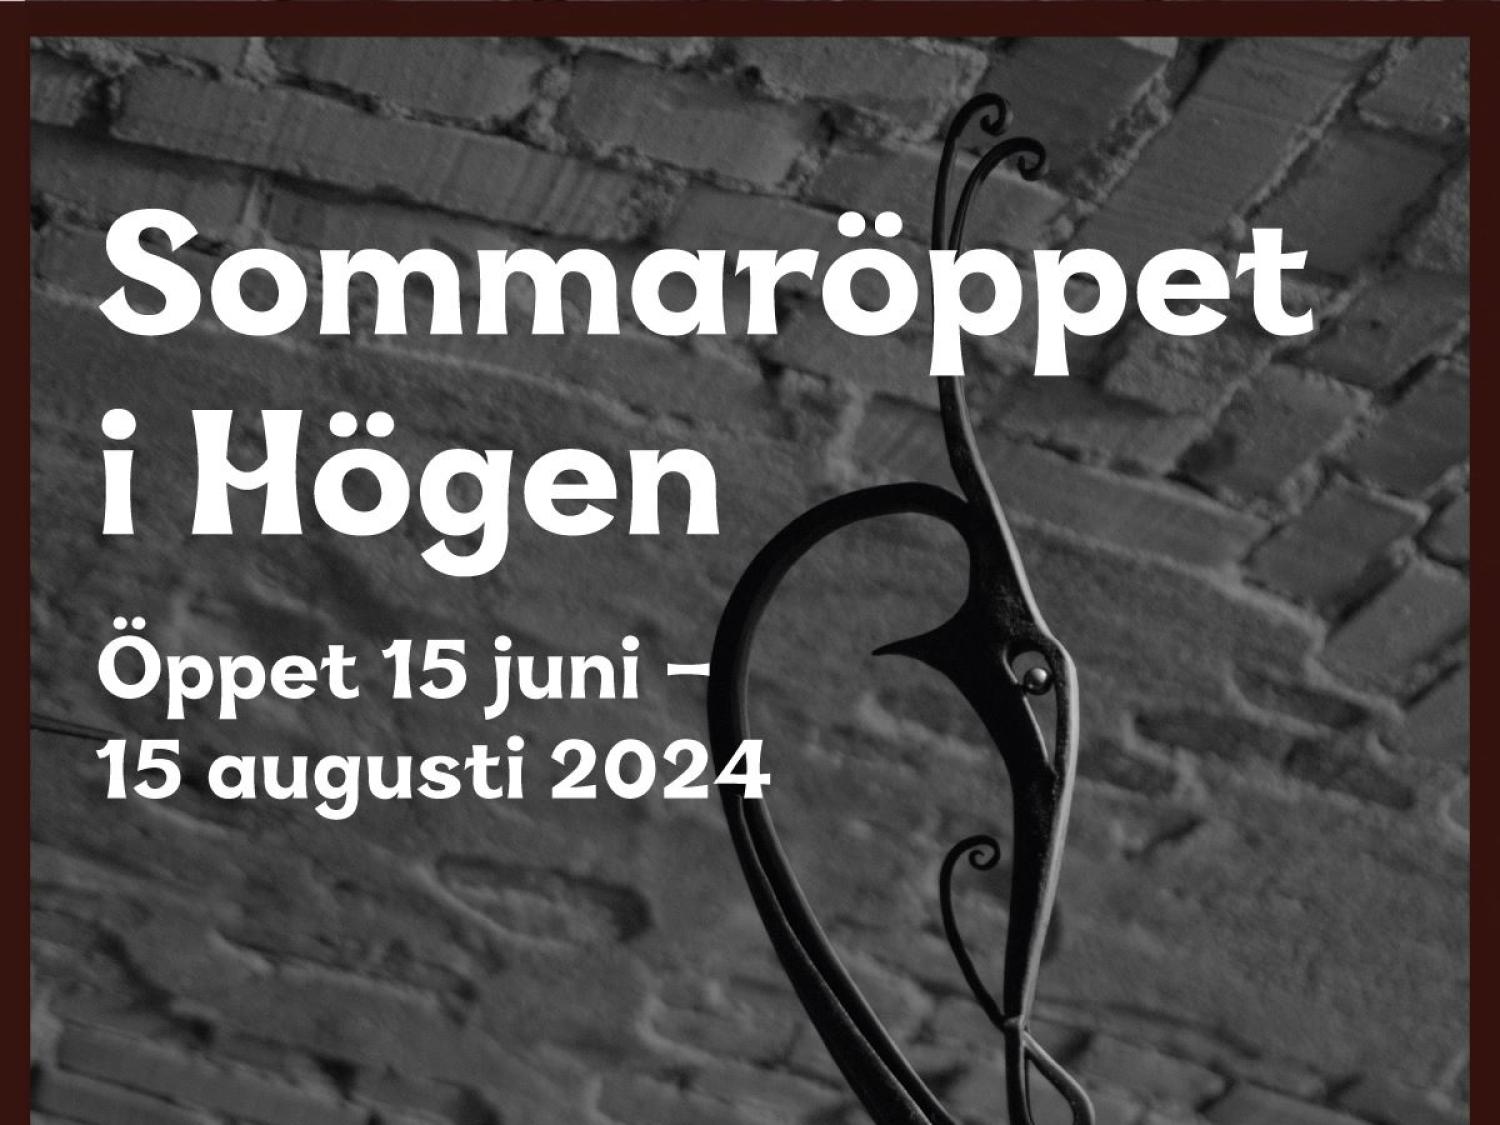 Summer open in Högen